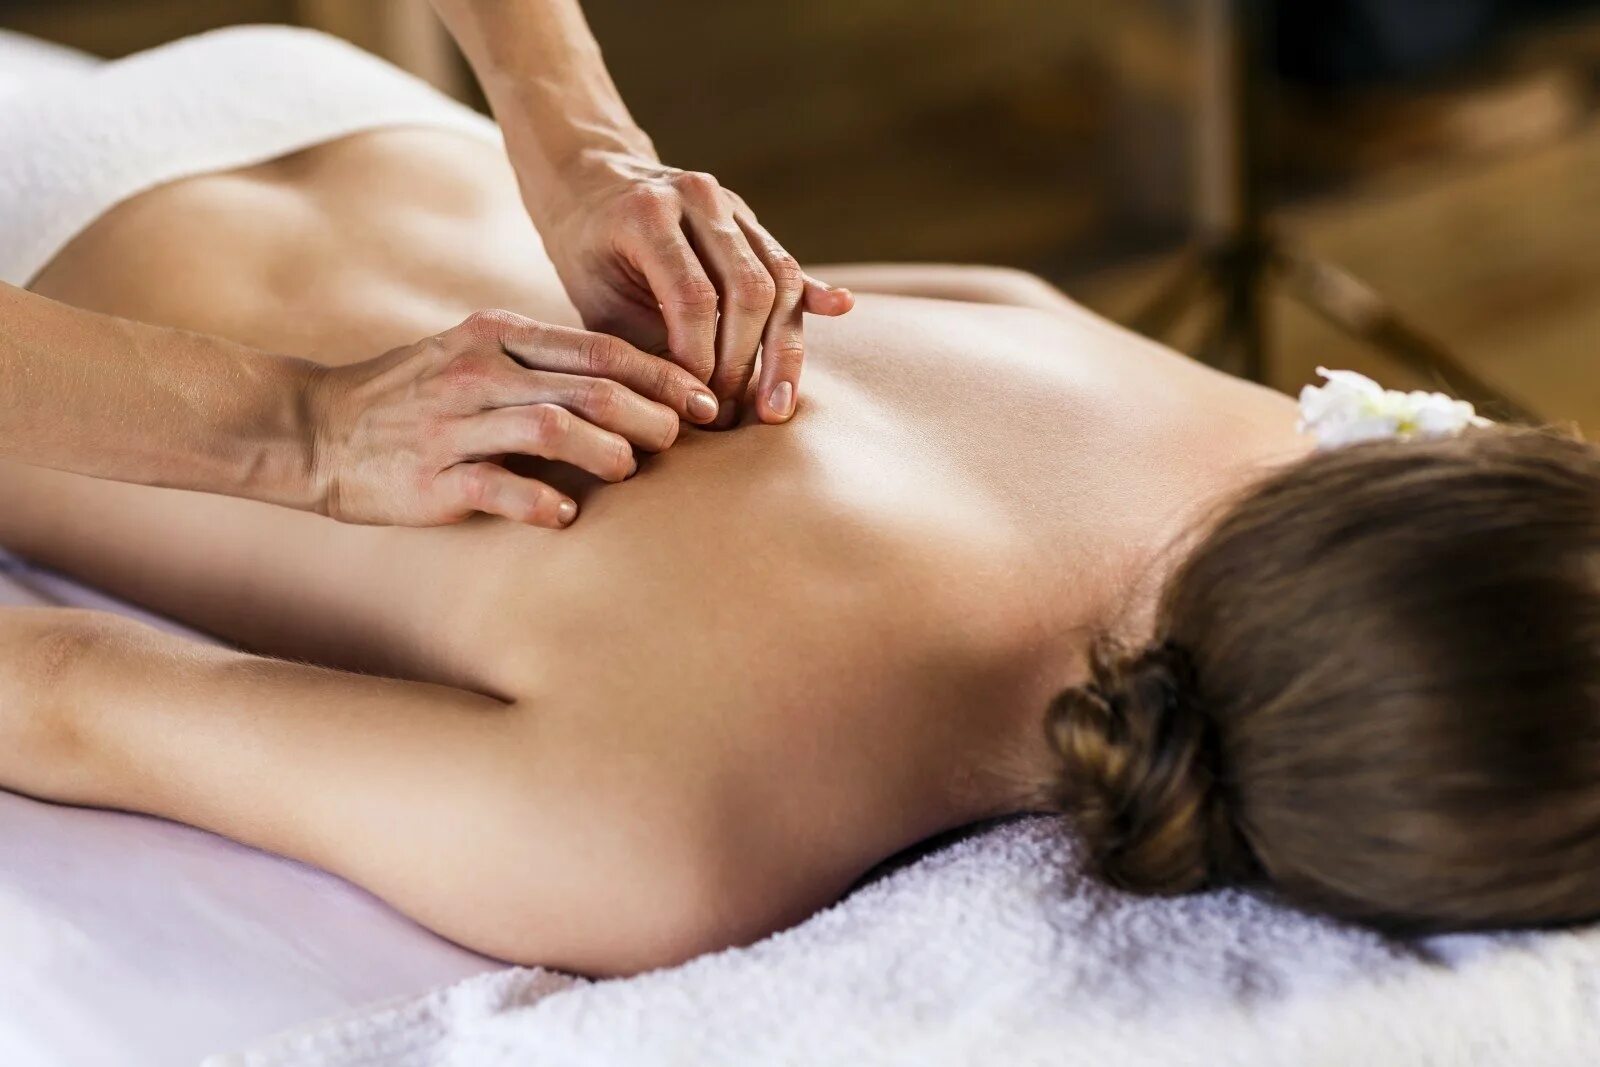 Massage liza. Массаж тела. Массаж фото. Массаж тела для женщин. Нежный массаж.